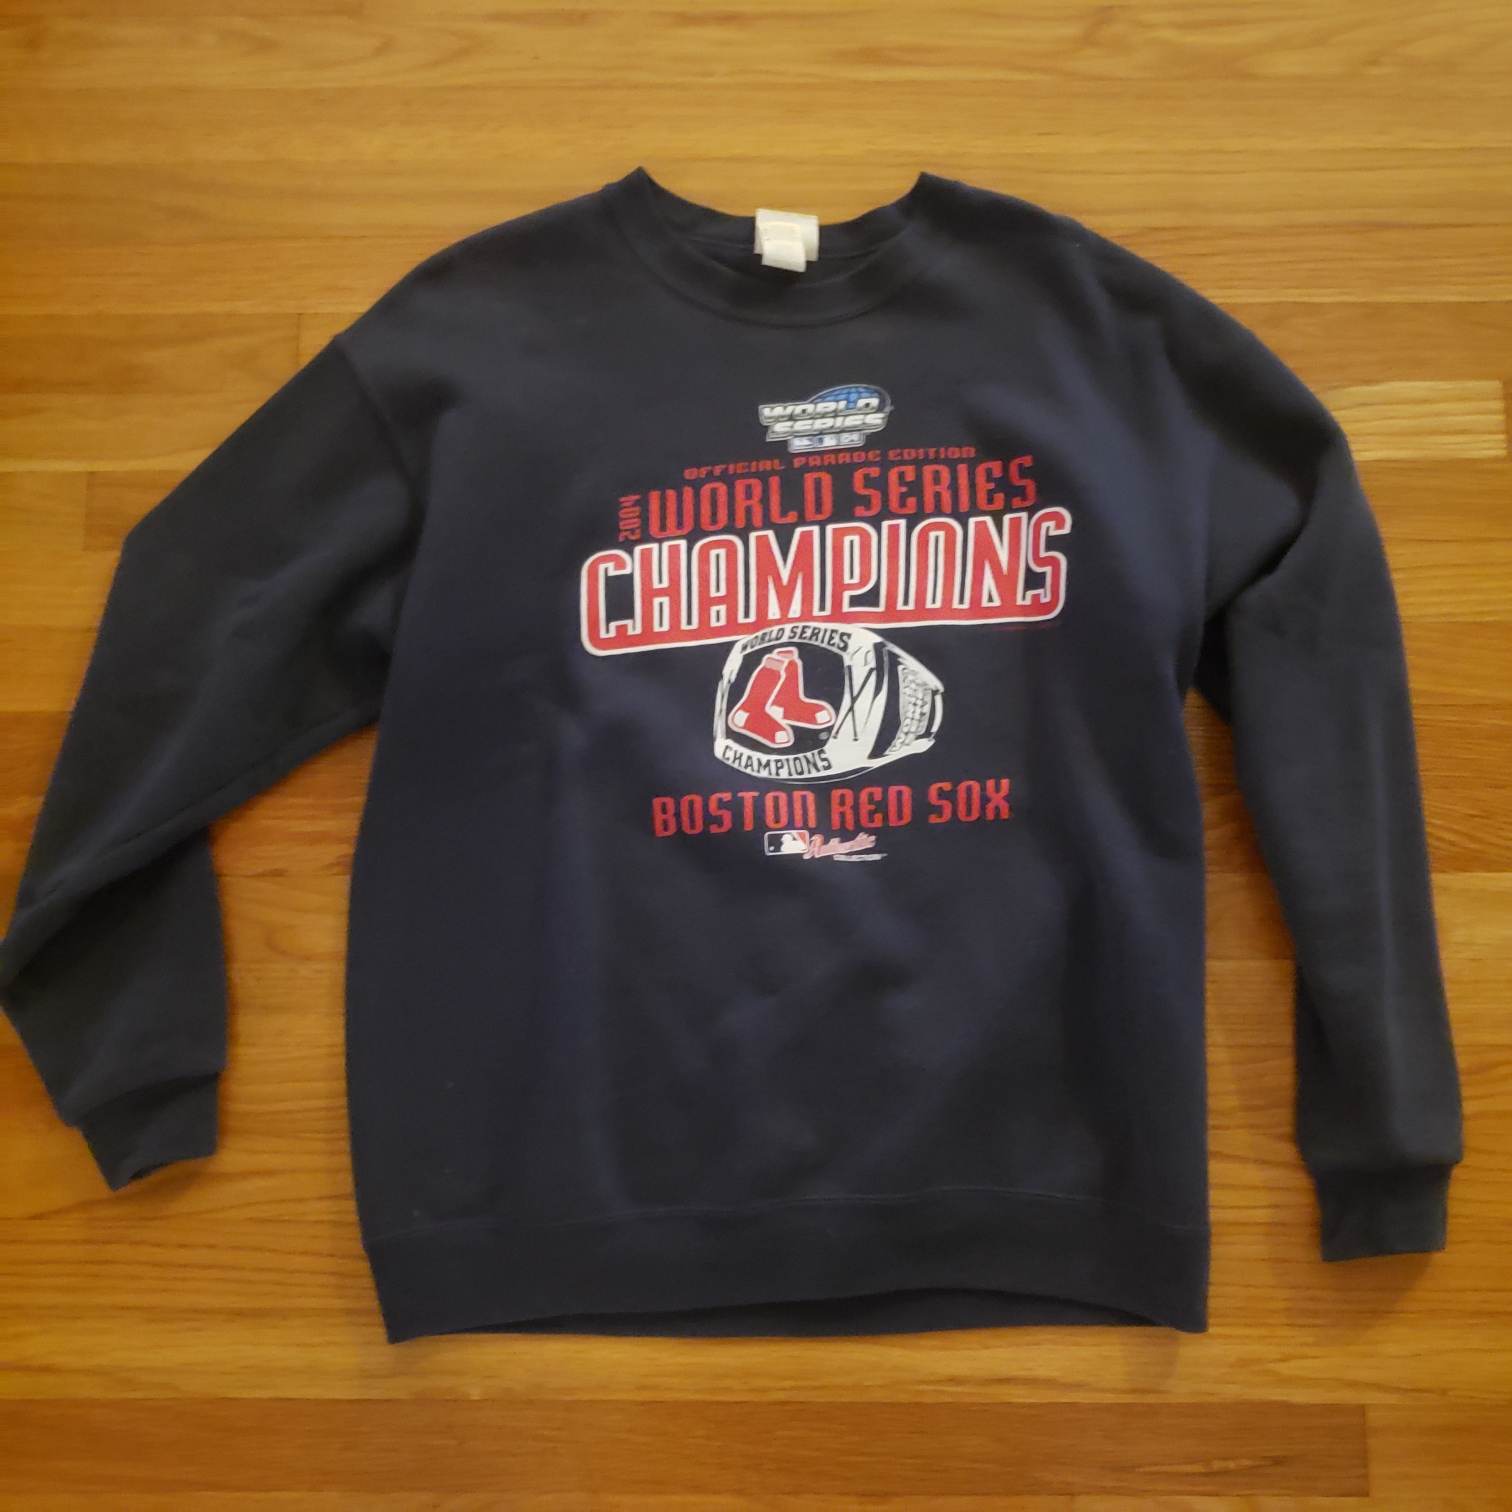 Boston Red Sox 2004 World Series Champions Vintage MLB Sweatshirt Size Medium